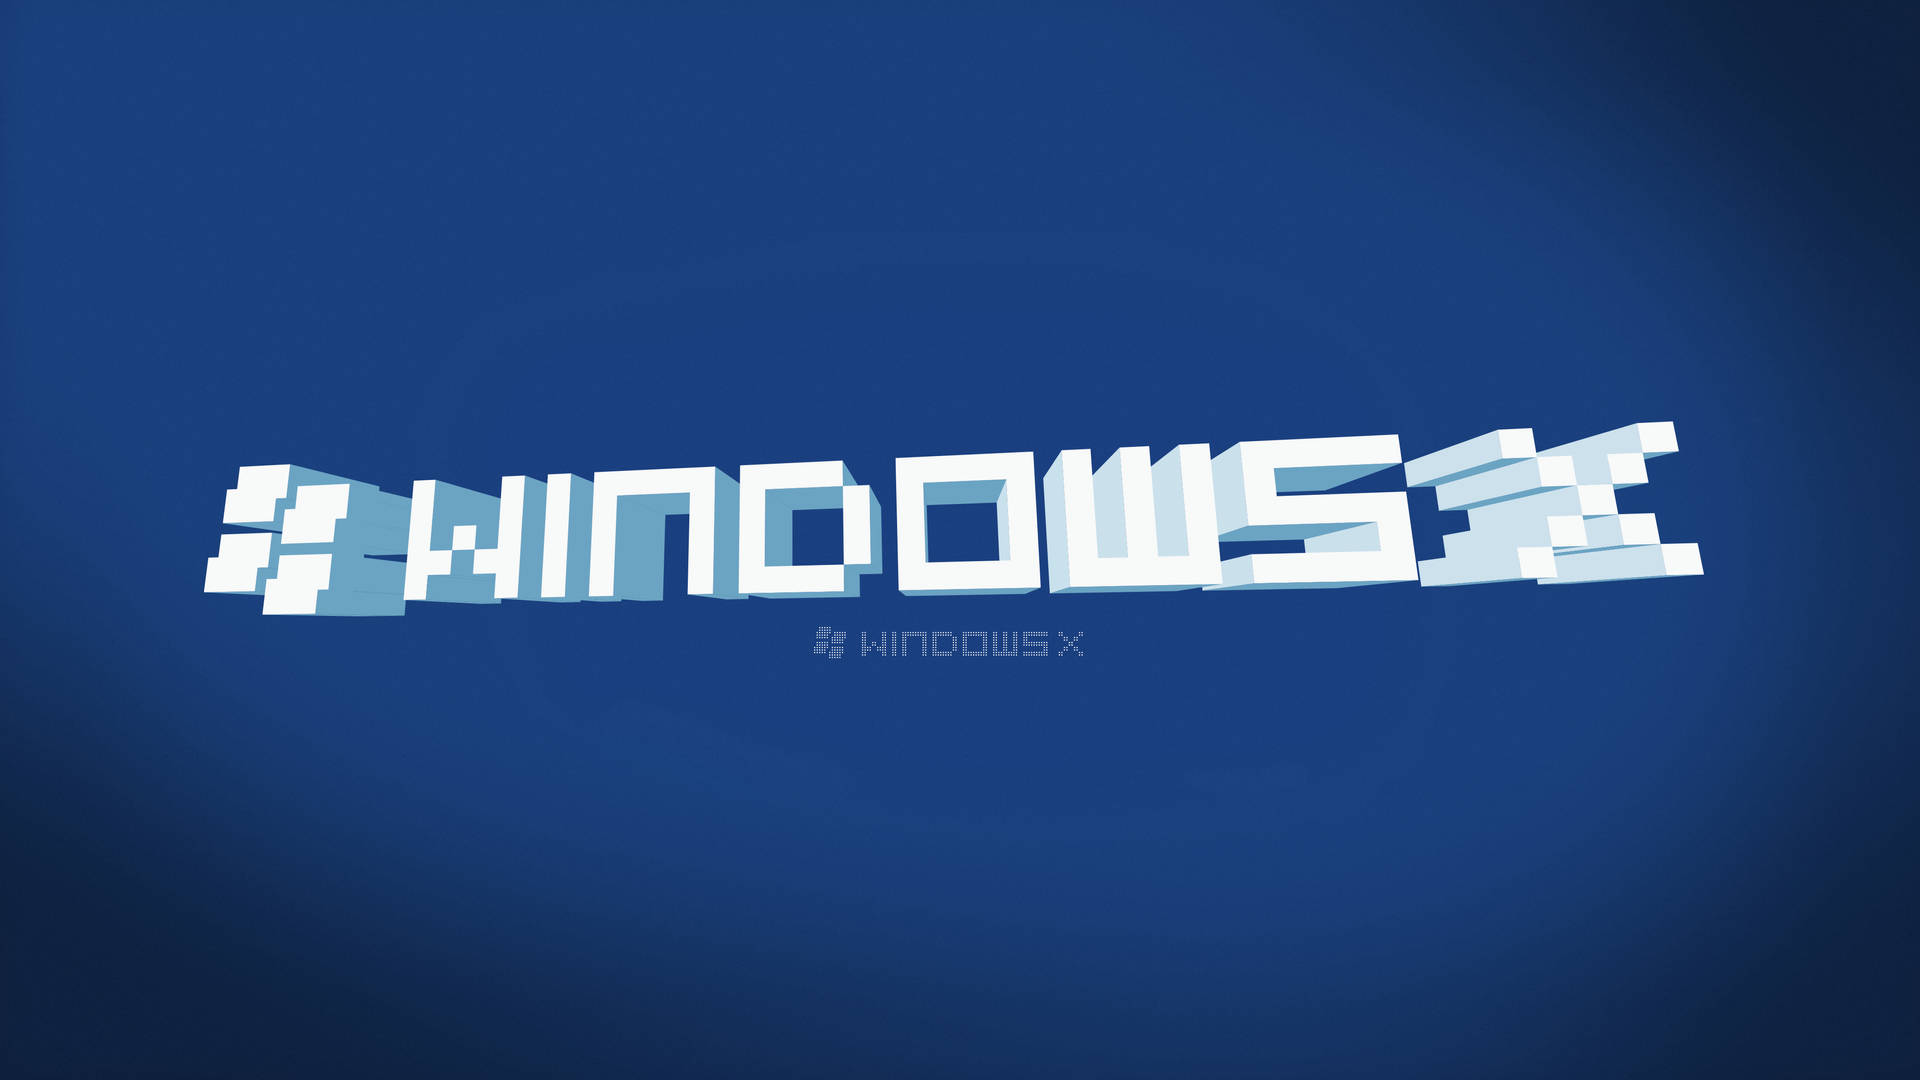 Windows 10 Hd Blue X Wallpaper